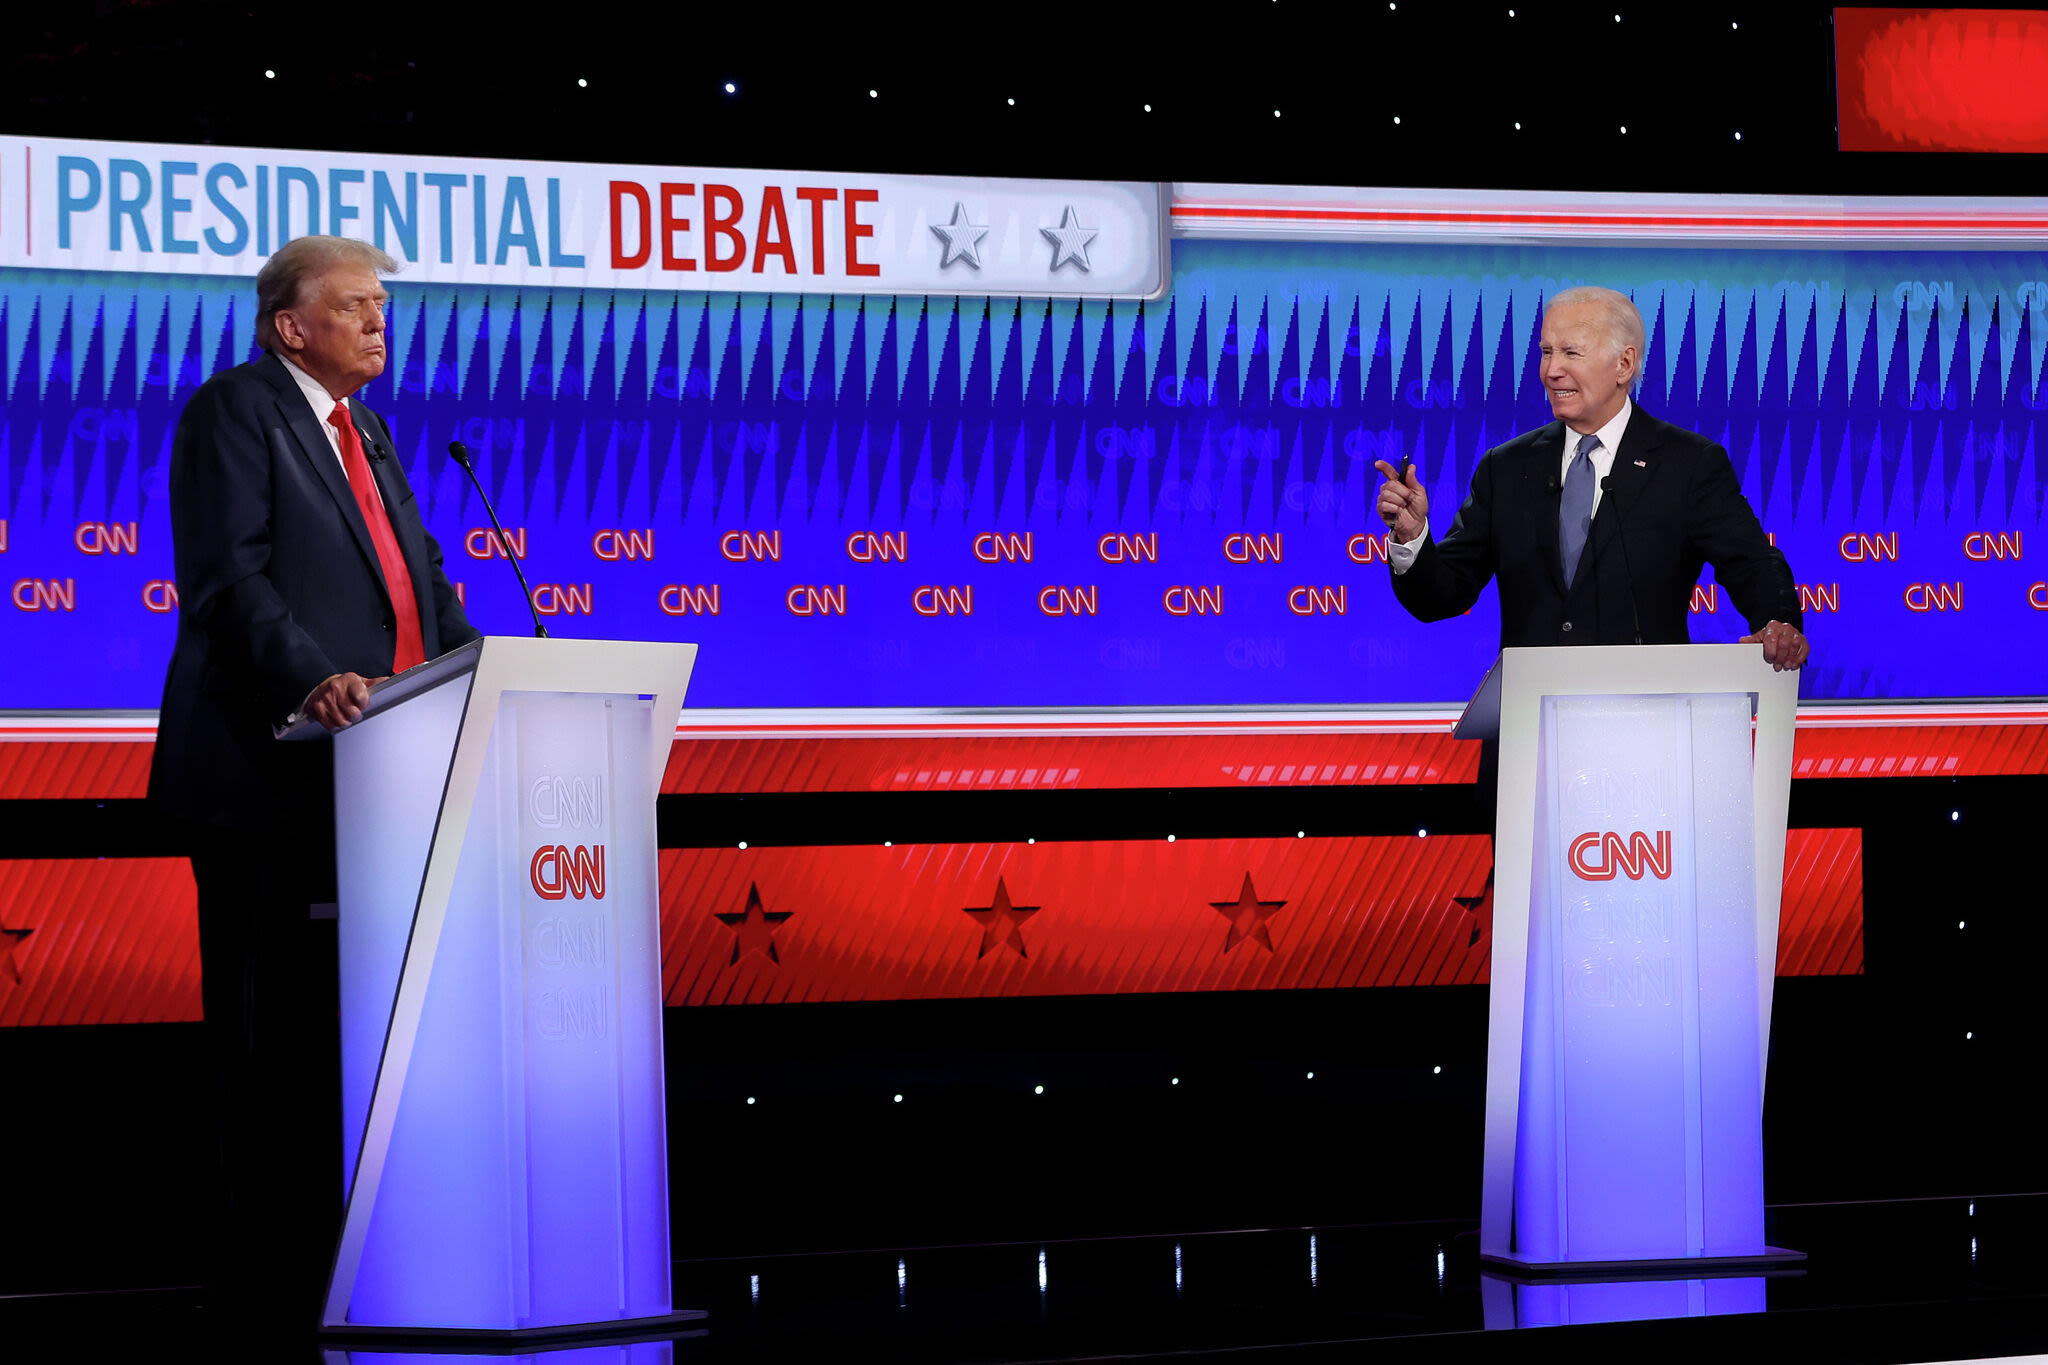 Texas politicians slam Biden after 'disastrous' presidential debate